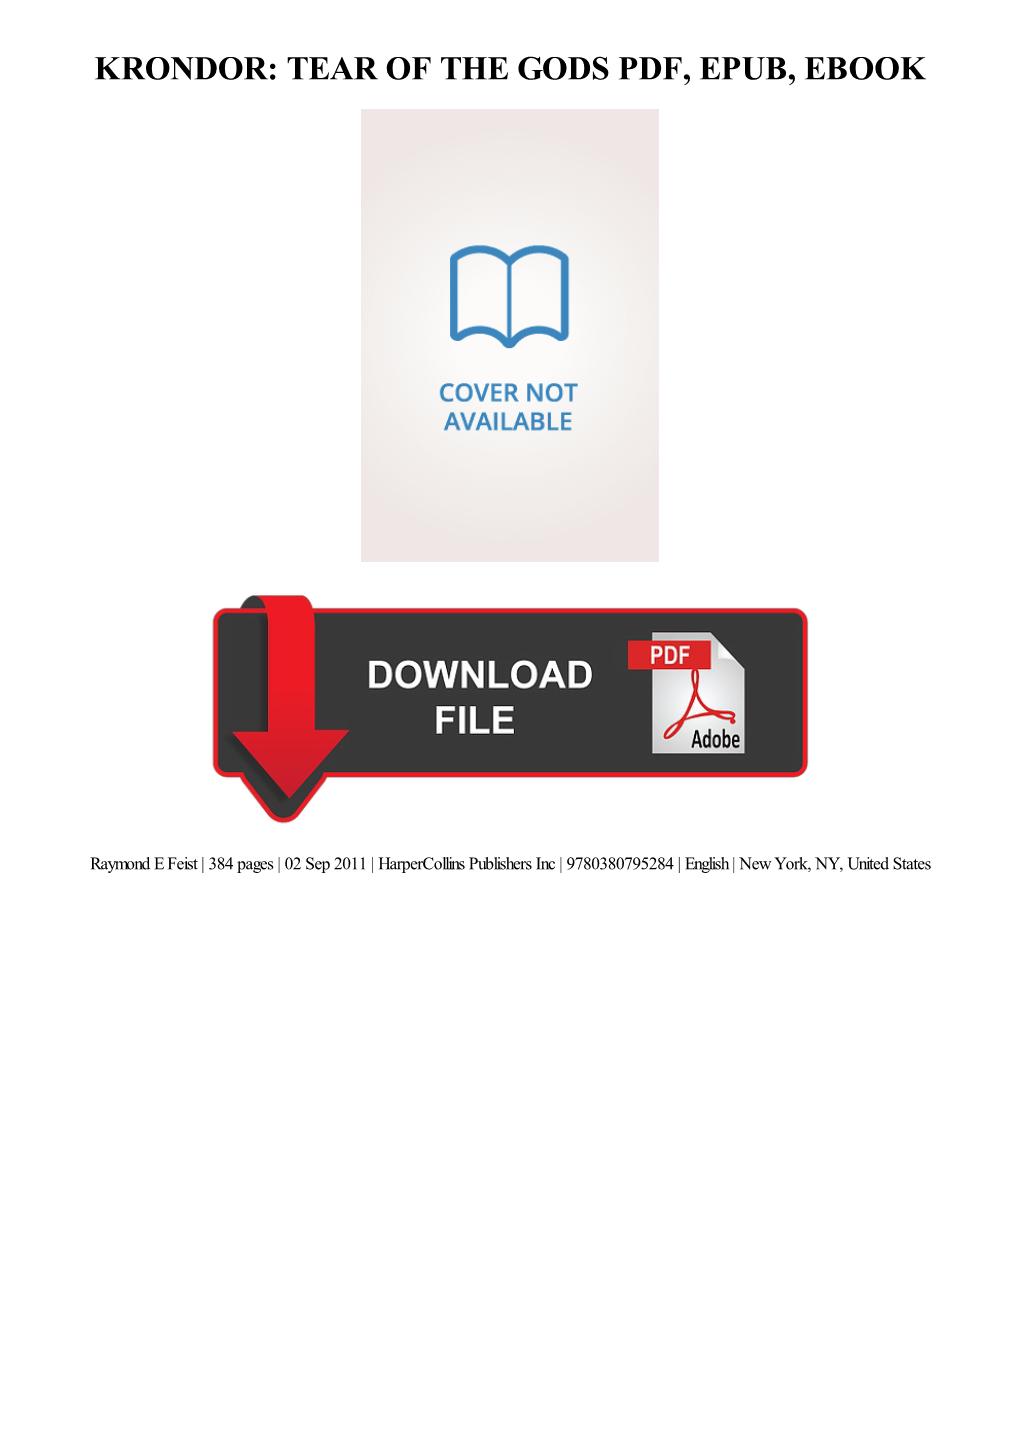 Ebook Download Krondor: Tear of the Gods